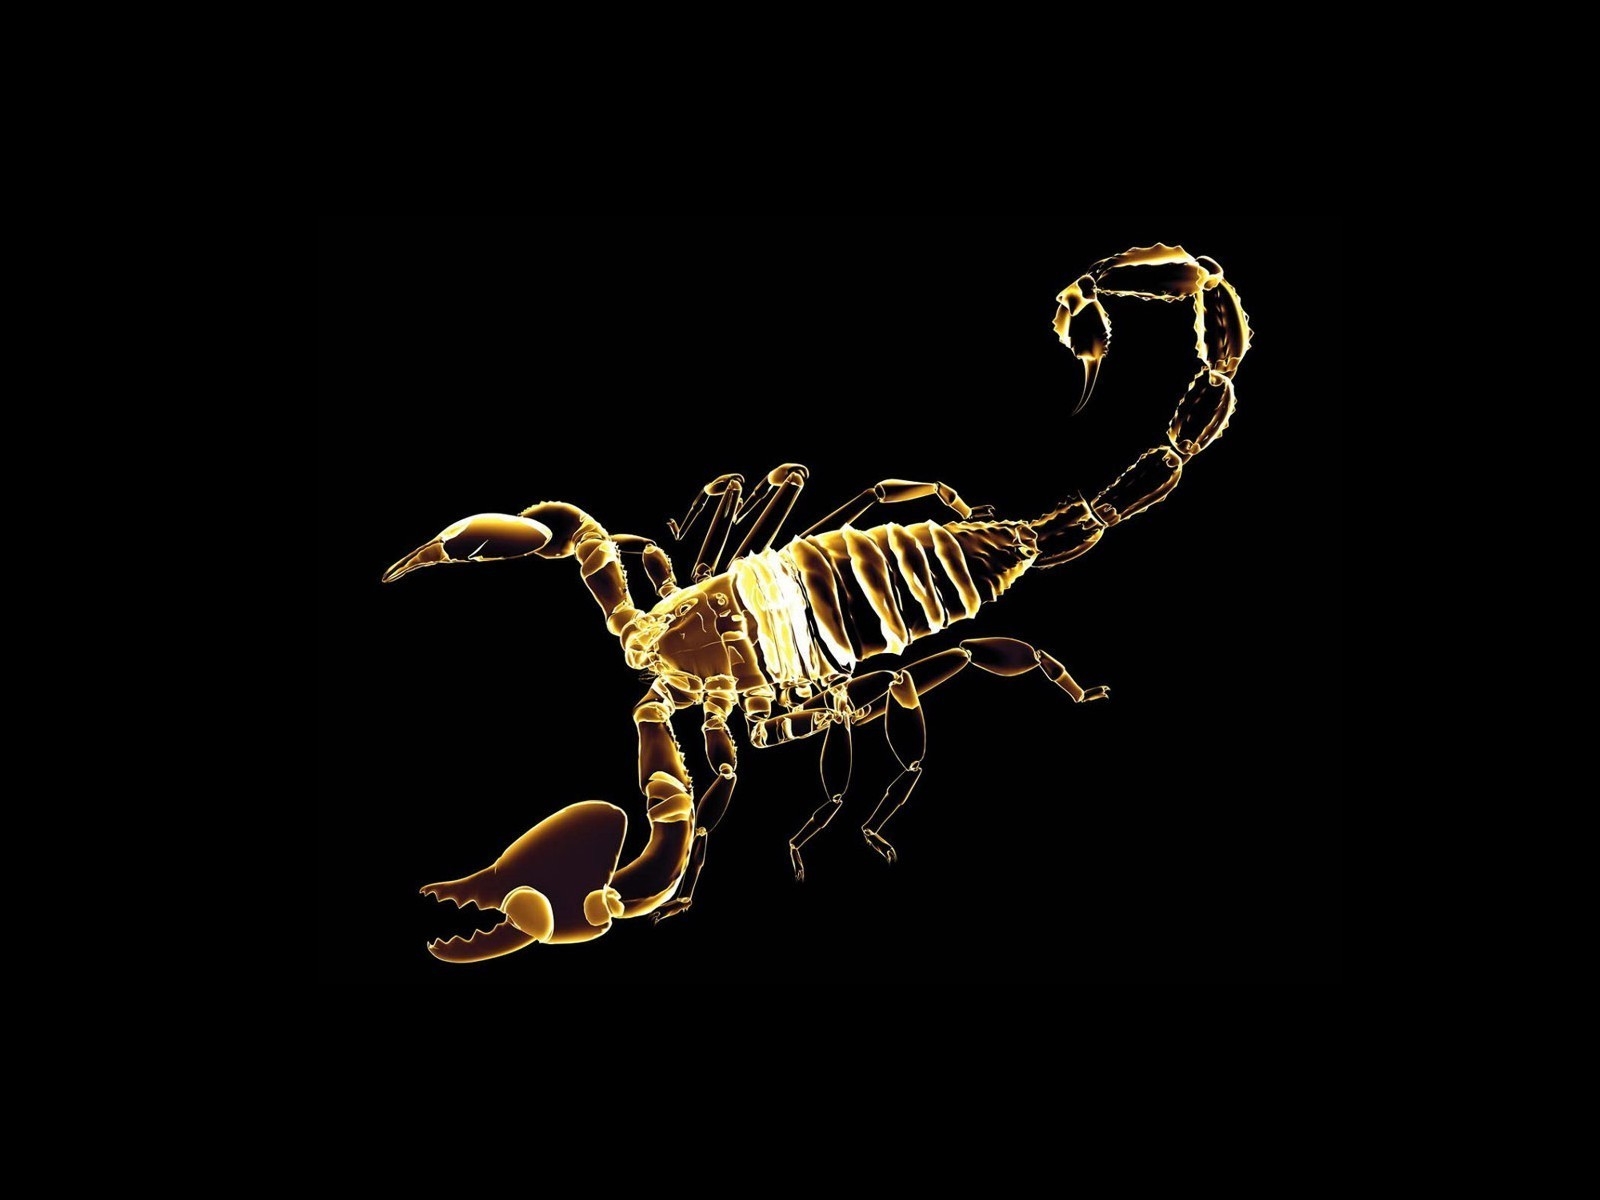 Scorpion for 1600 x 1200 resolution